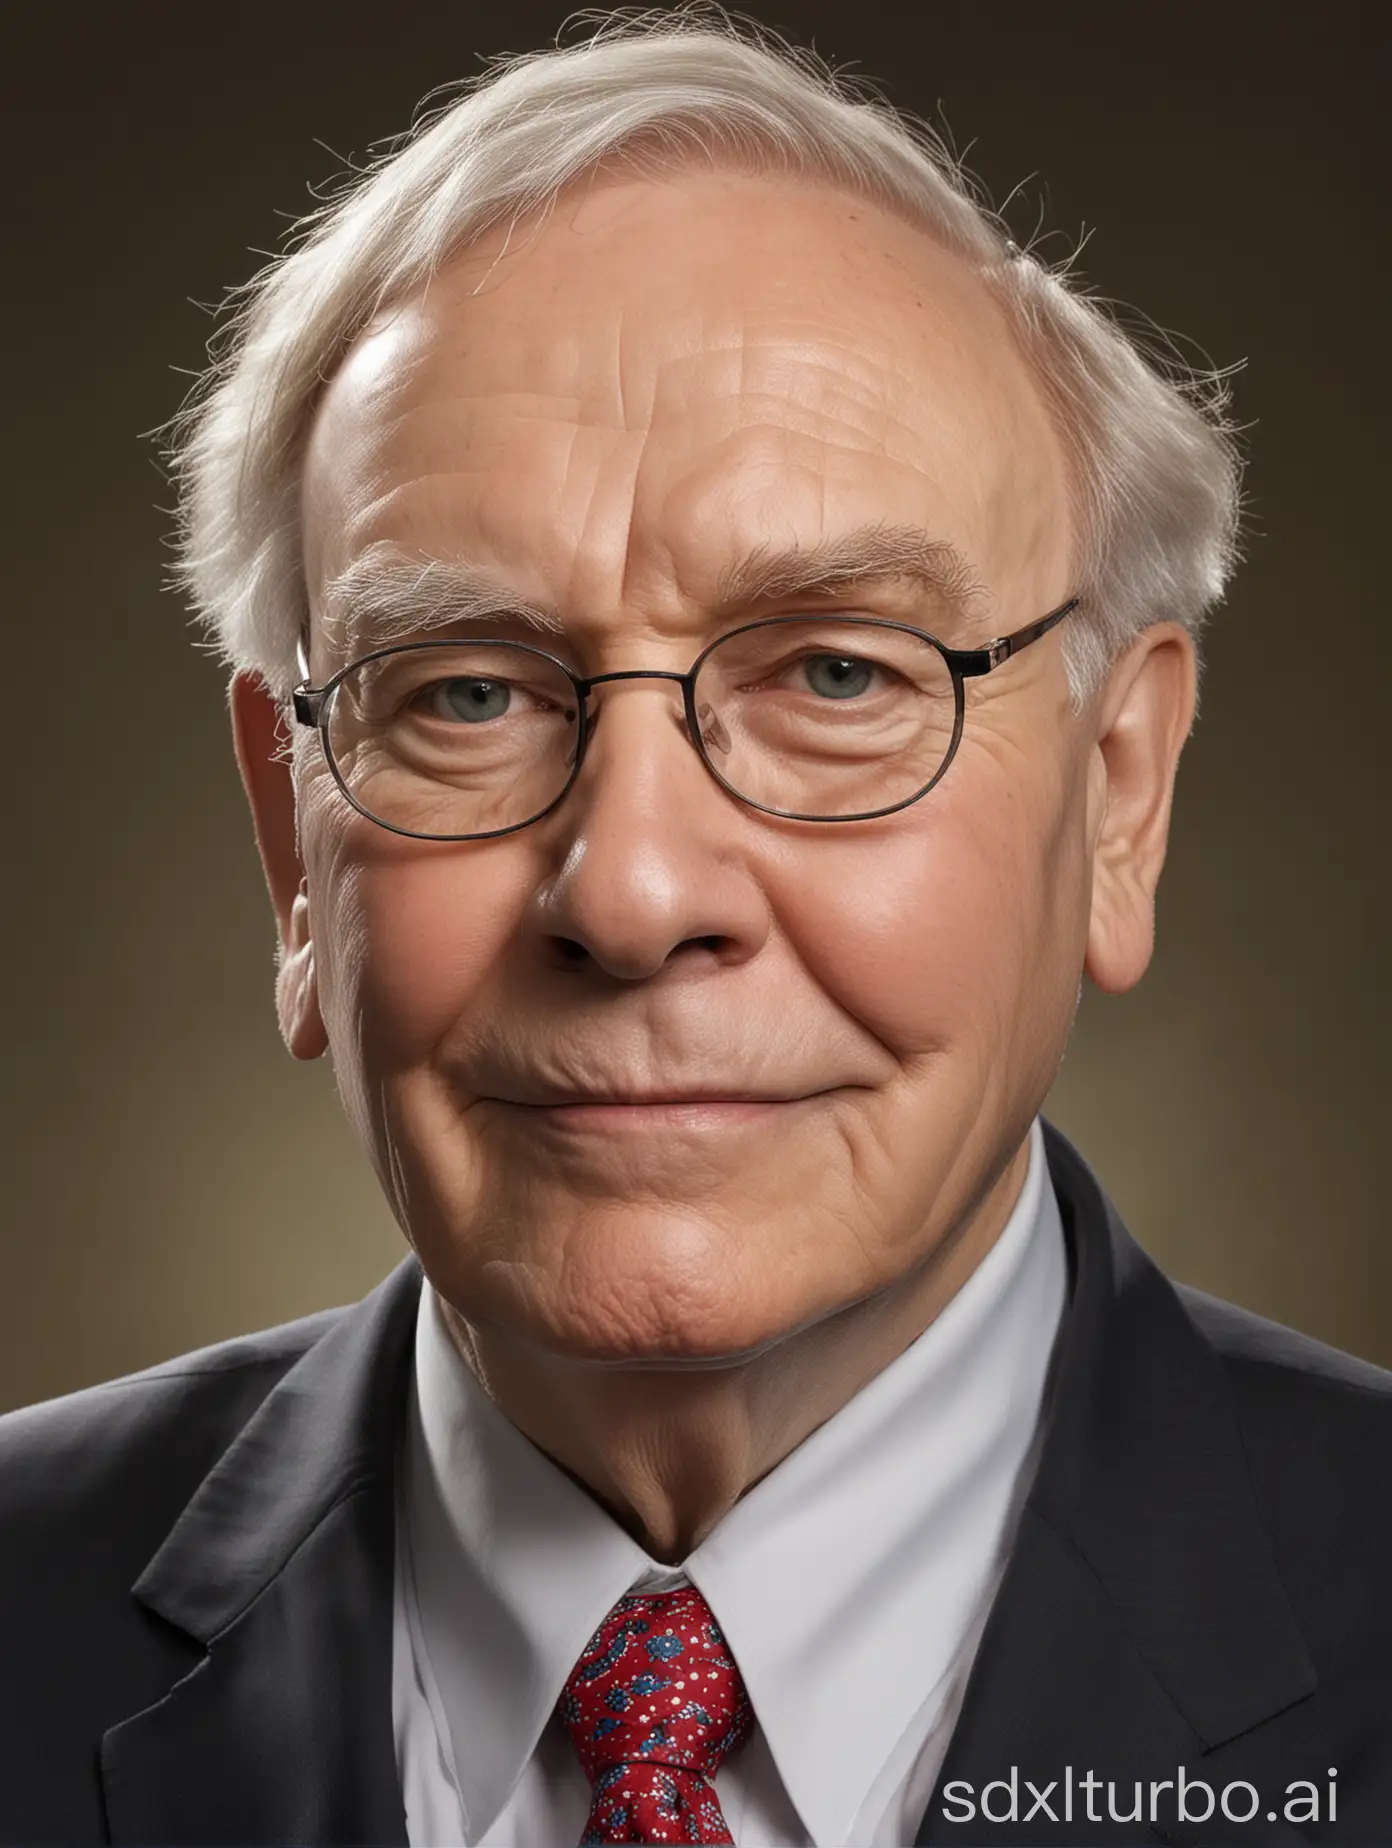 Warren-Buffett-Portrait-Celebrated-Investor-and-Philanthropist-in-Thoughtful-Contemplation